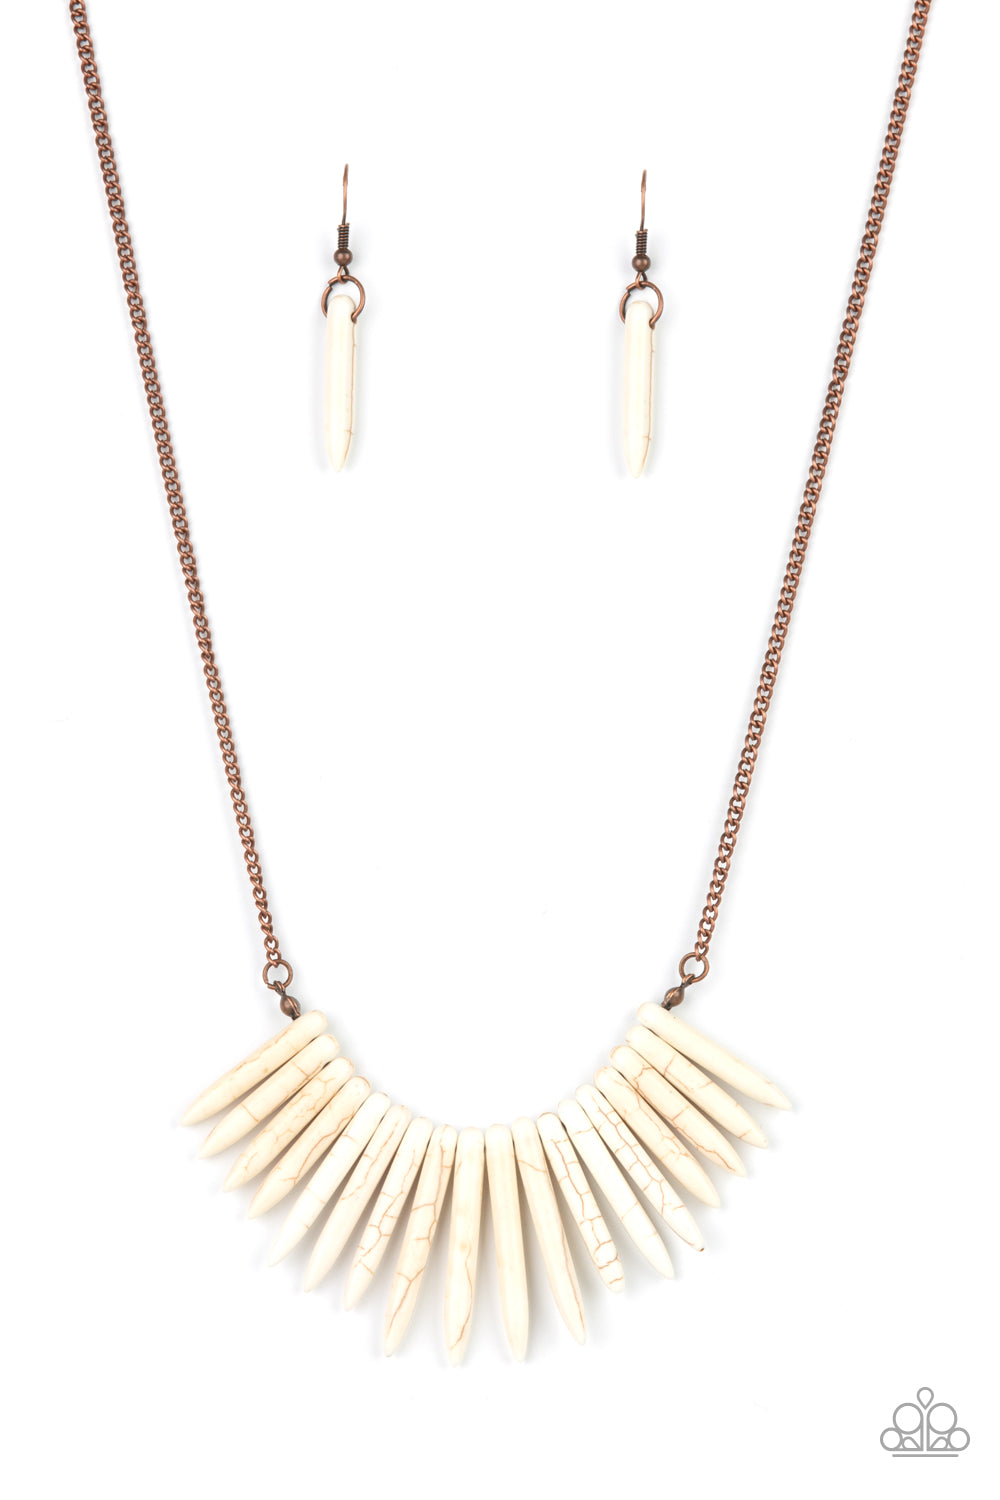 Paparazzi Accessories Exotic Edge - Copper Necklaces - Lady T Accessories